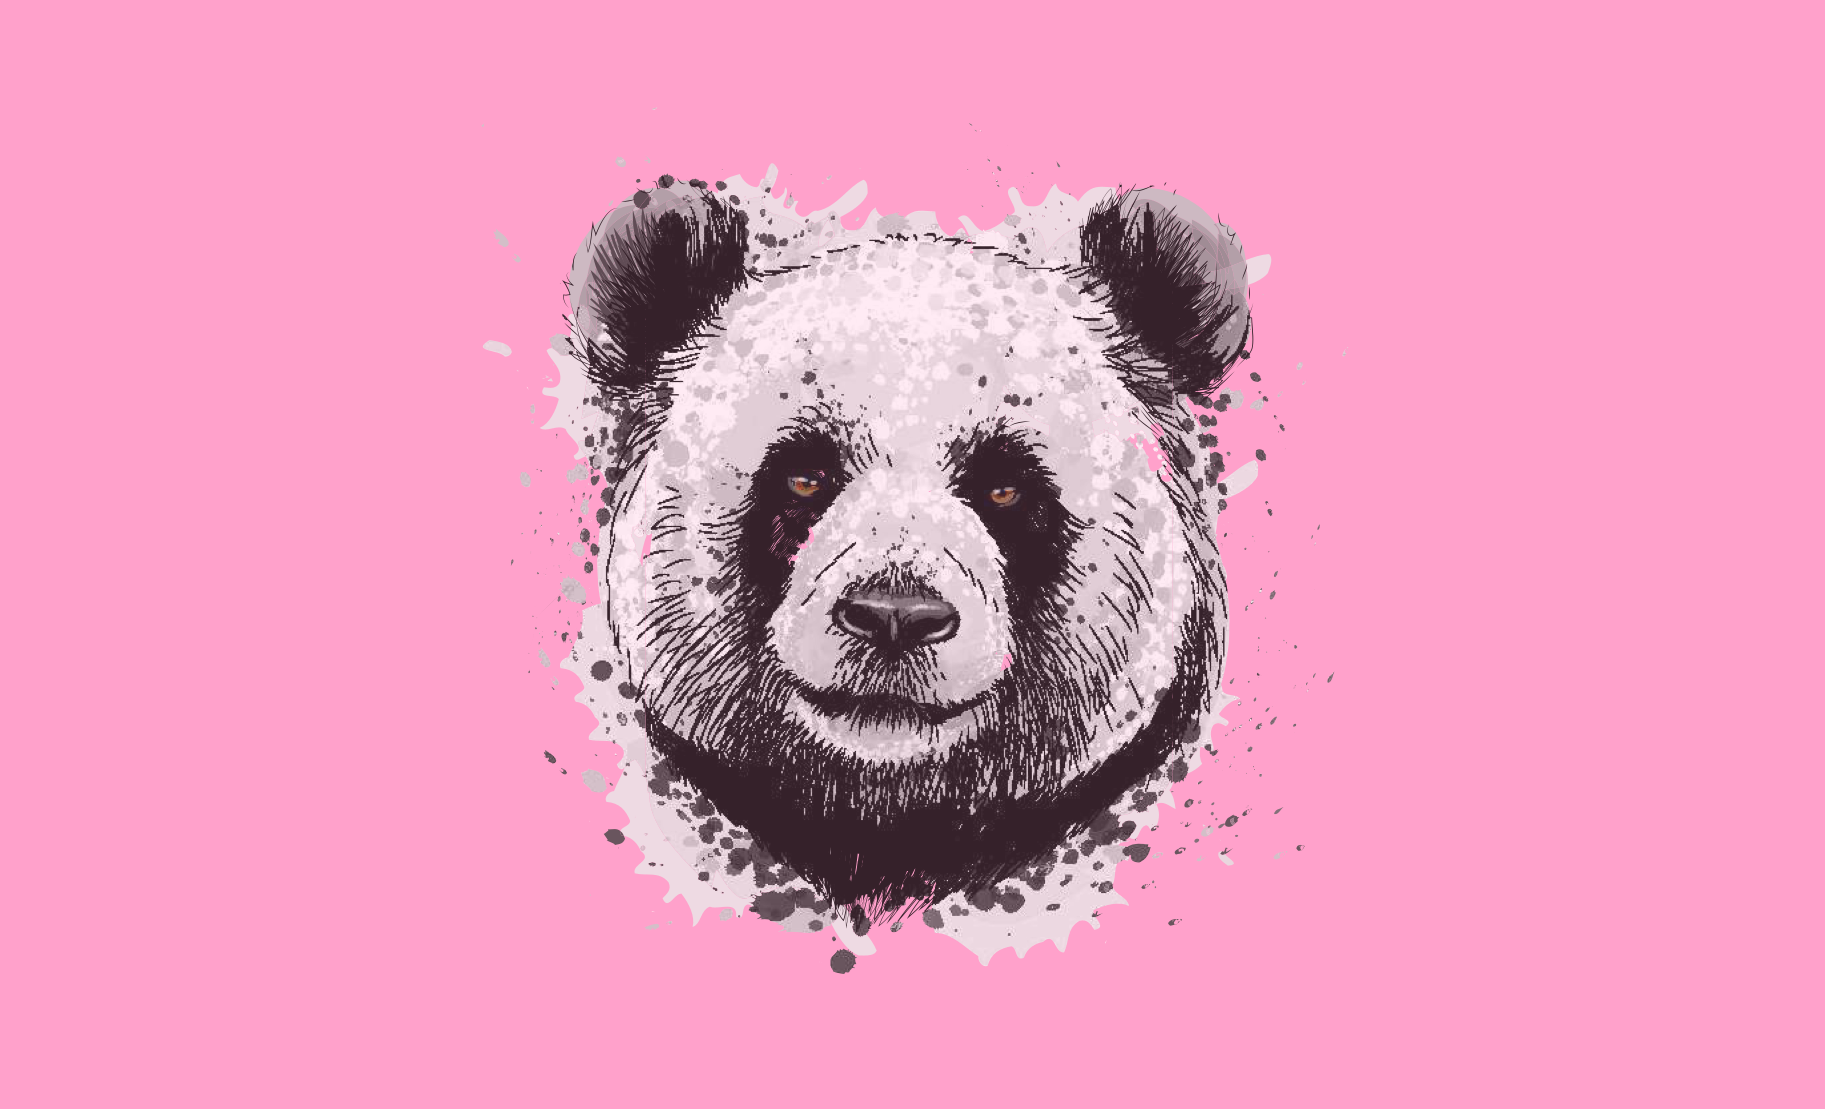 Introducing the Inclusive Panda